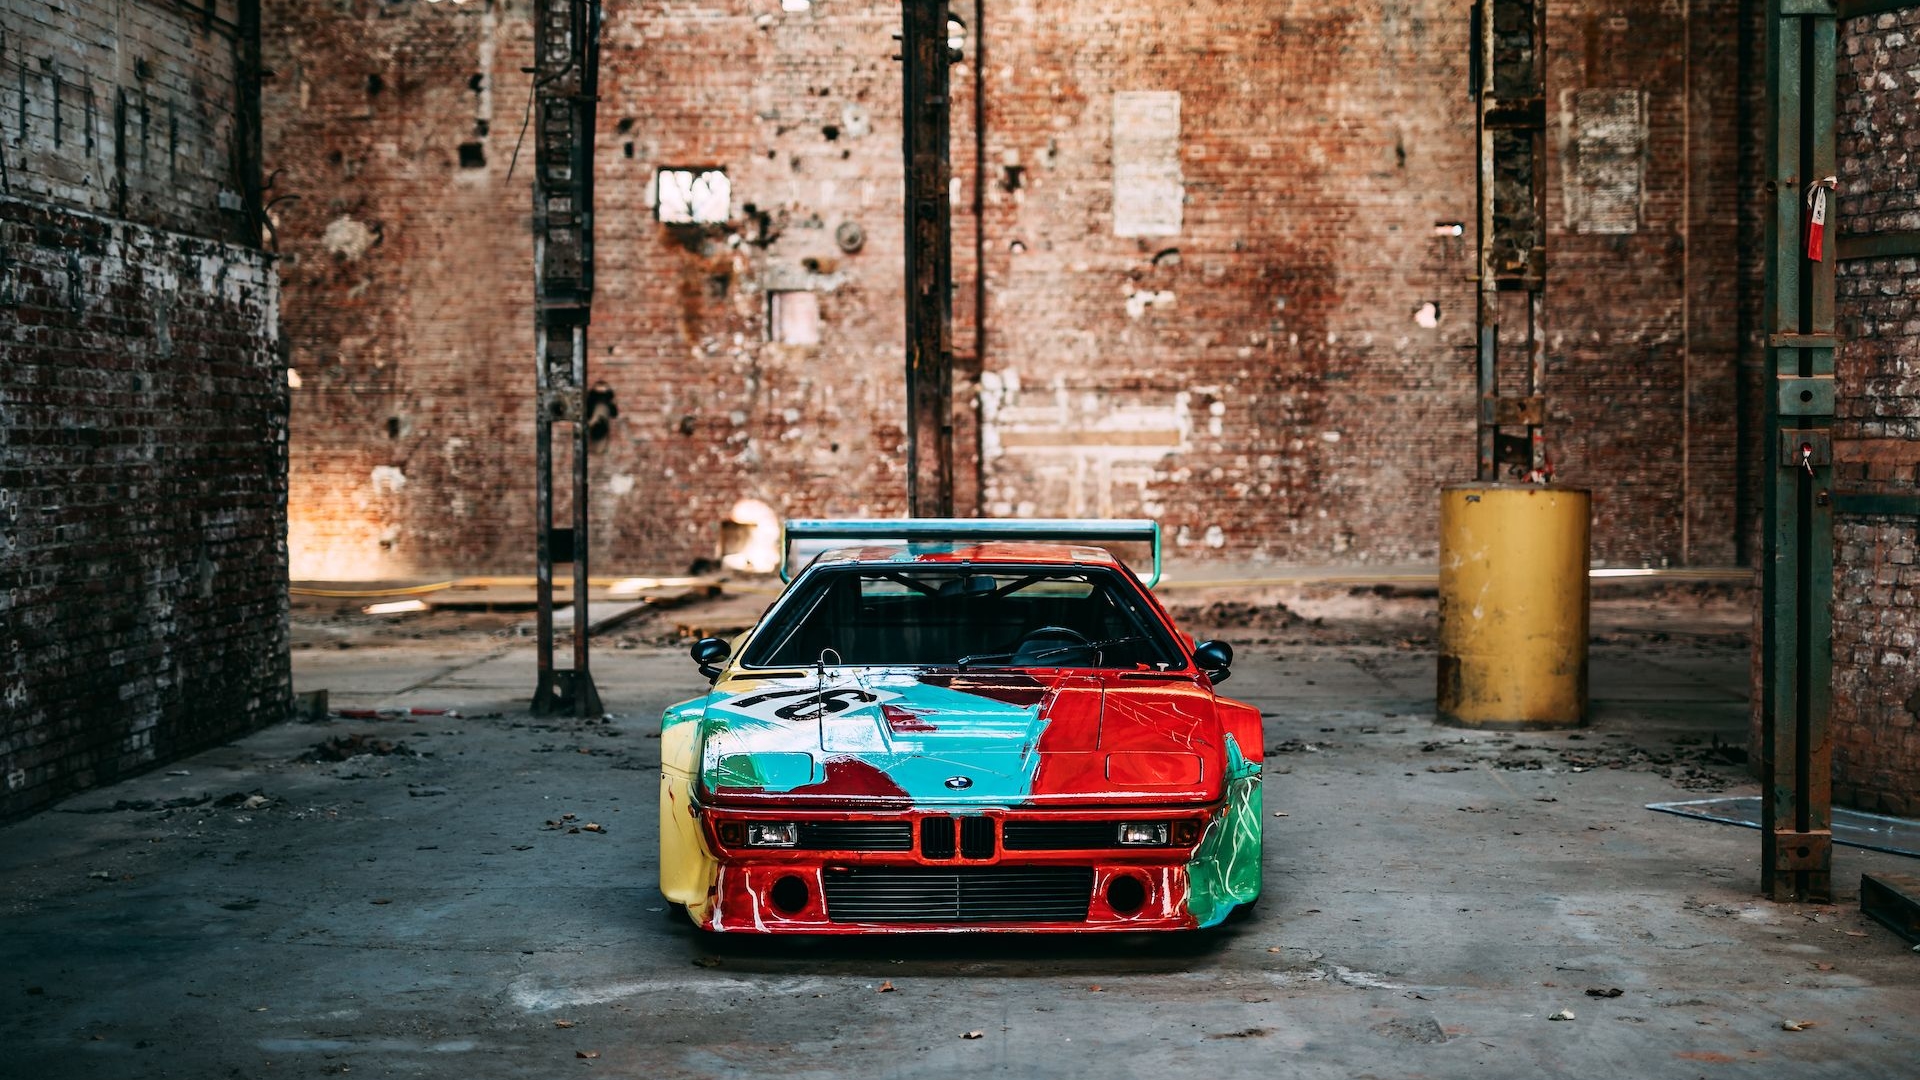 Andy Warhol BMW M1 Art Car turns 40 years old